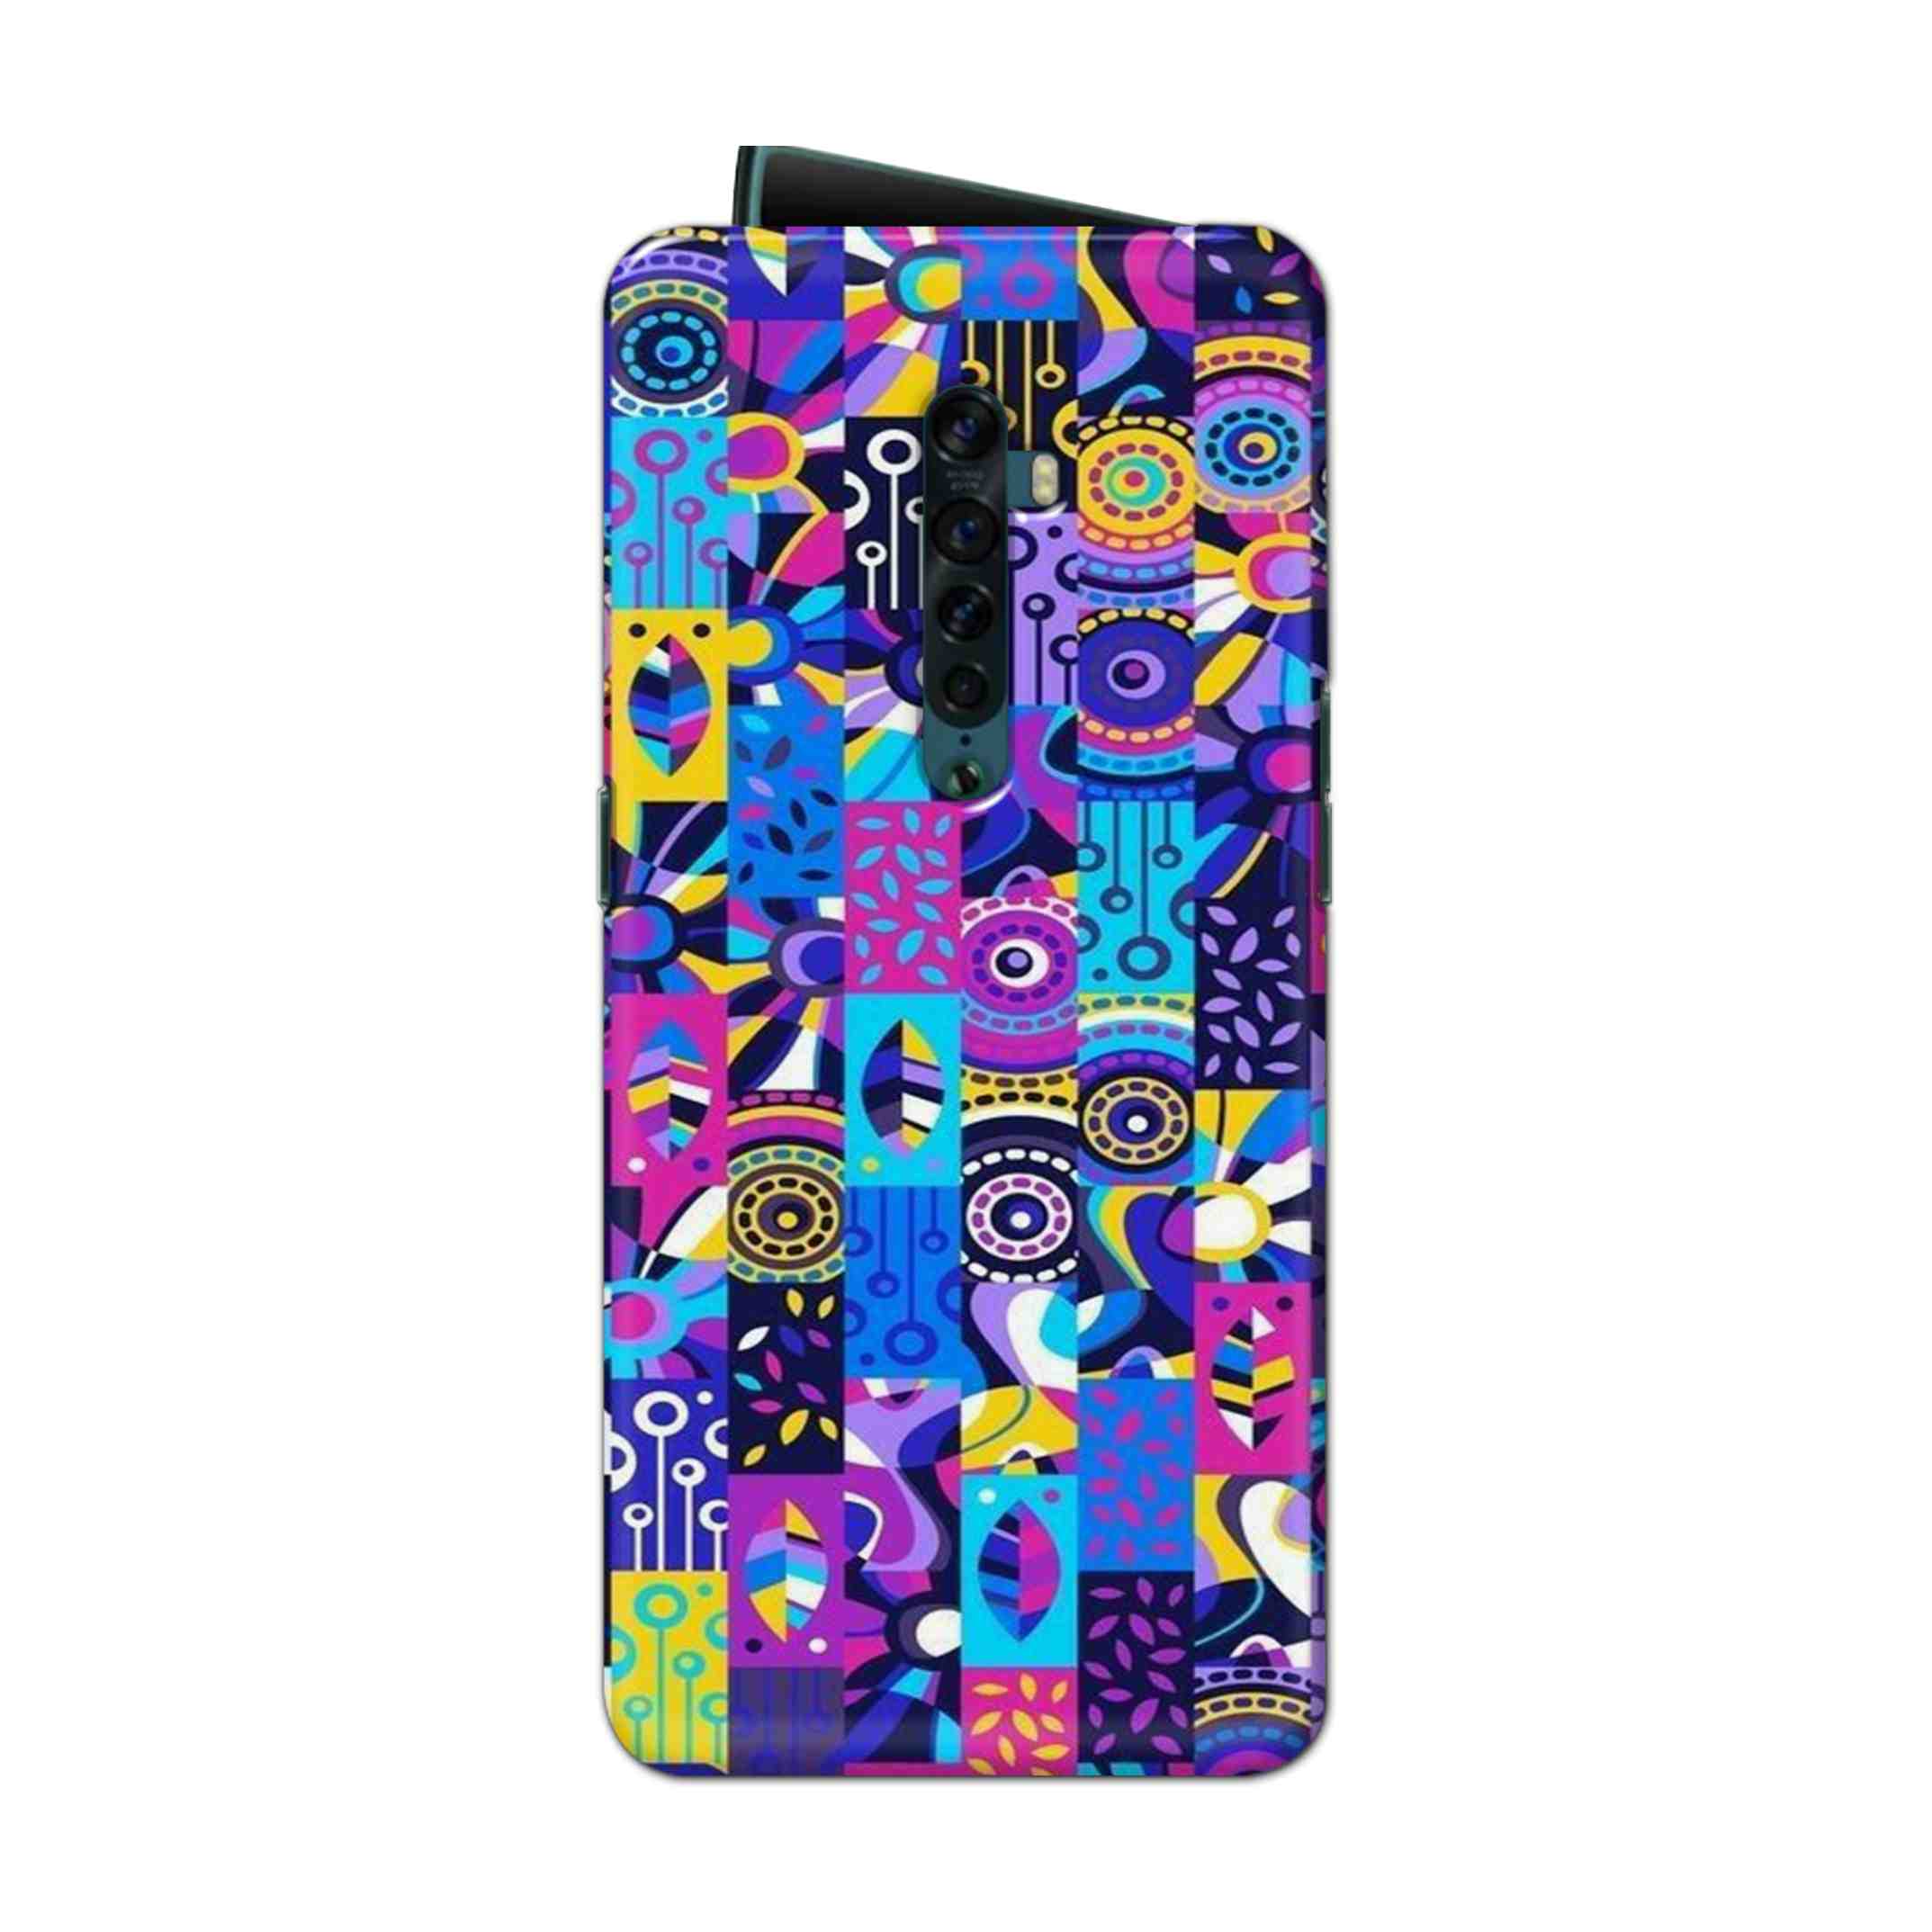 Buy Rainbow Art Hard Back Mobile Phone Case Cover For Oppo Reno 2 Online